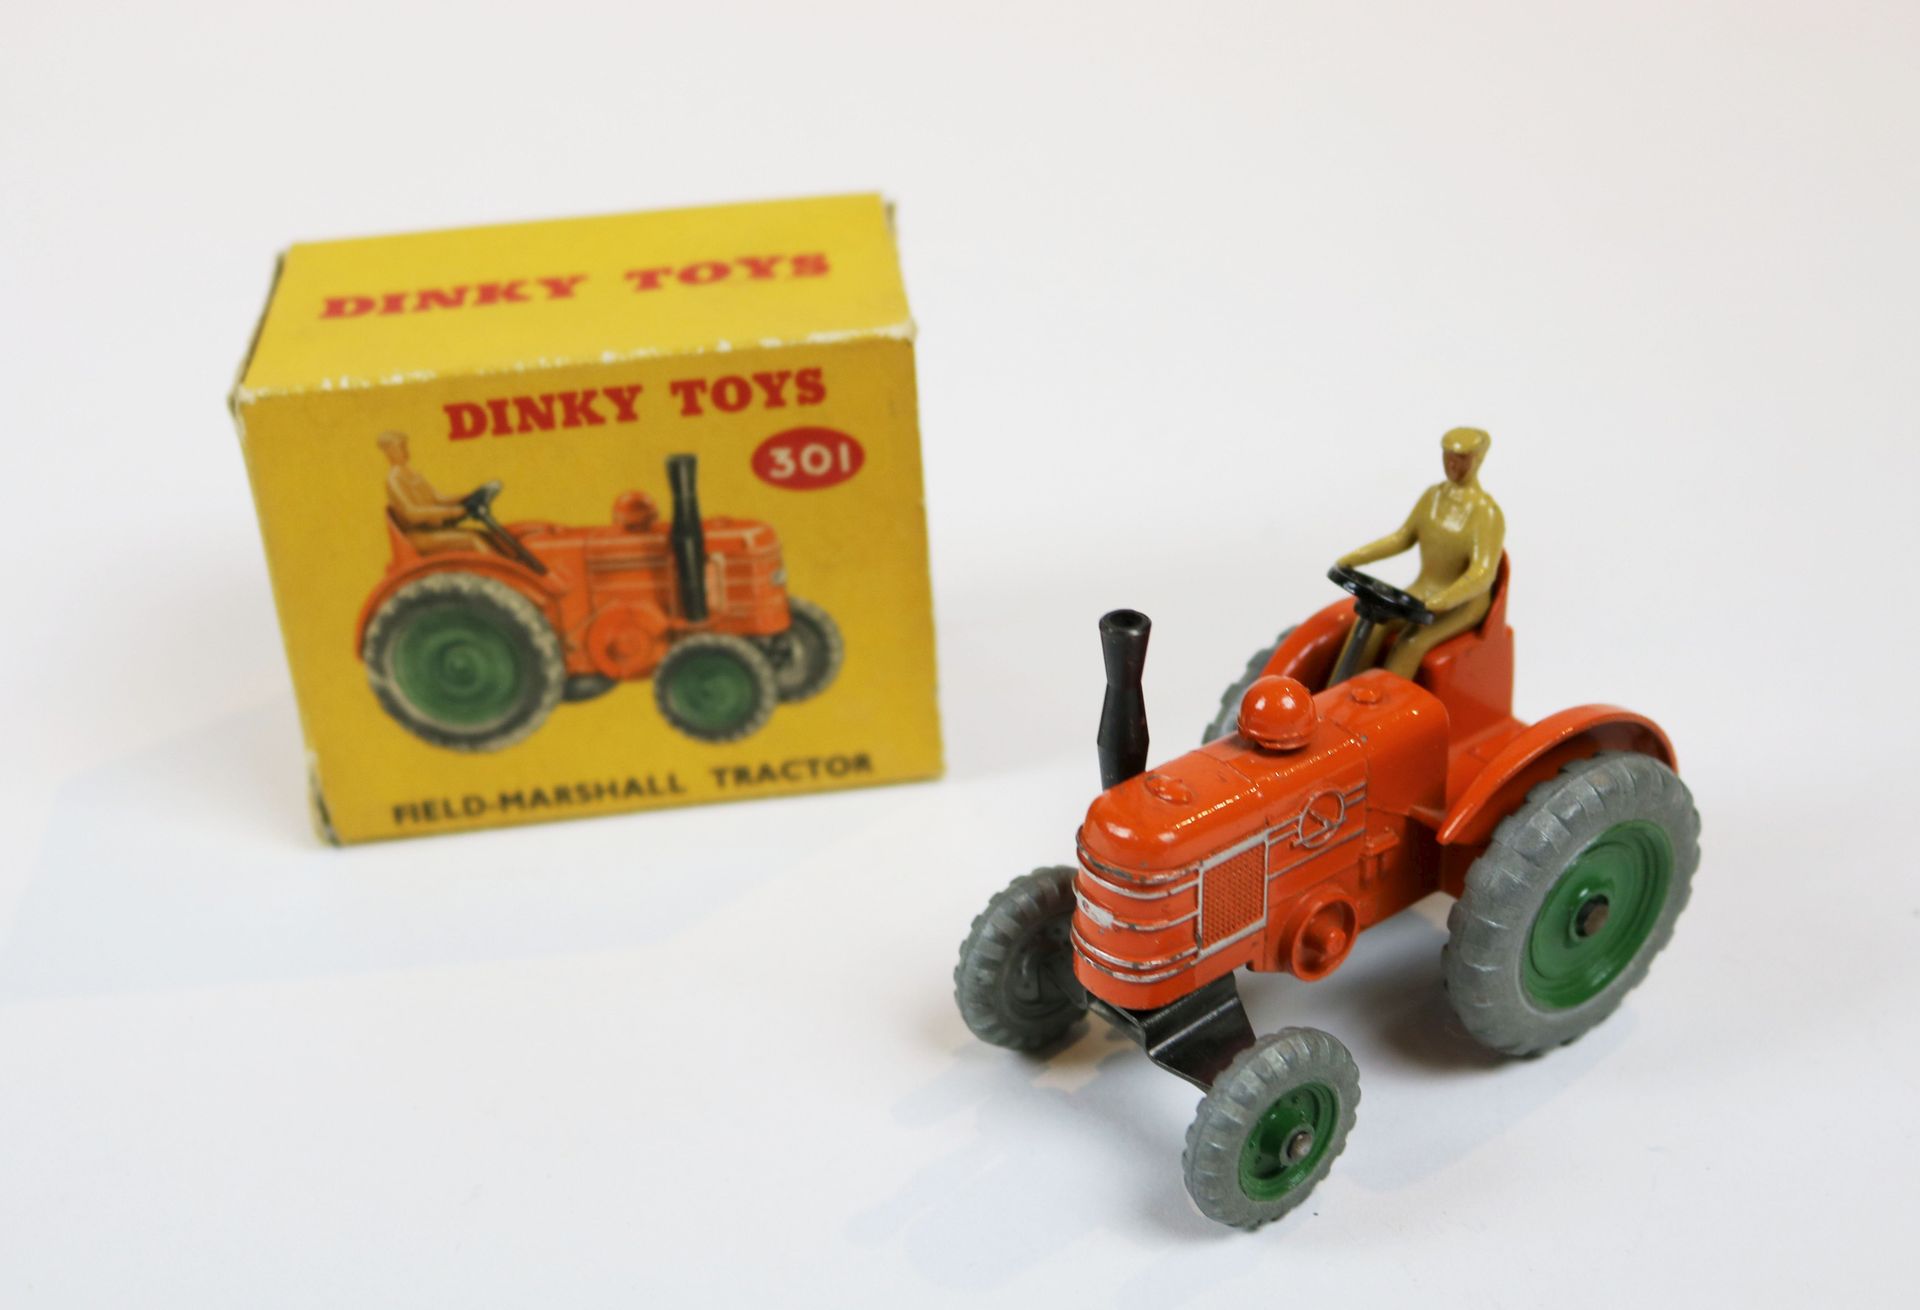 DINKY TOYS ANGLETERRE DINKY TOYS ANGLETERRE

Tracteur FIELD MARSHALL 30



Exper&hellip;